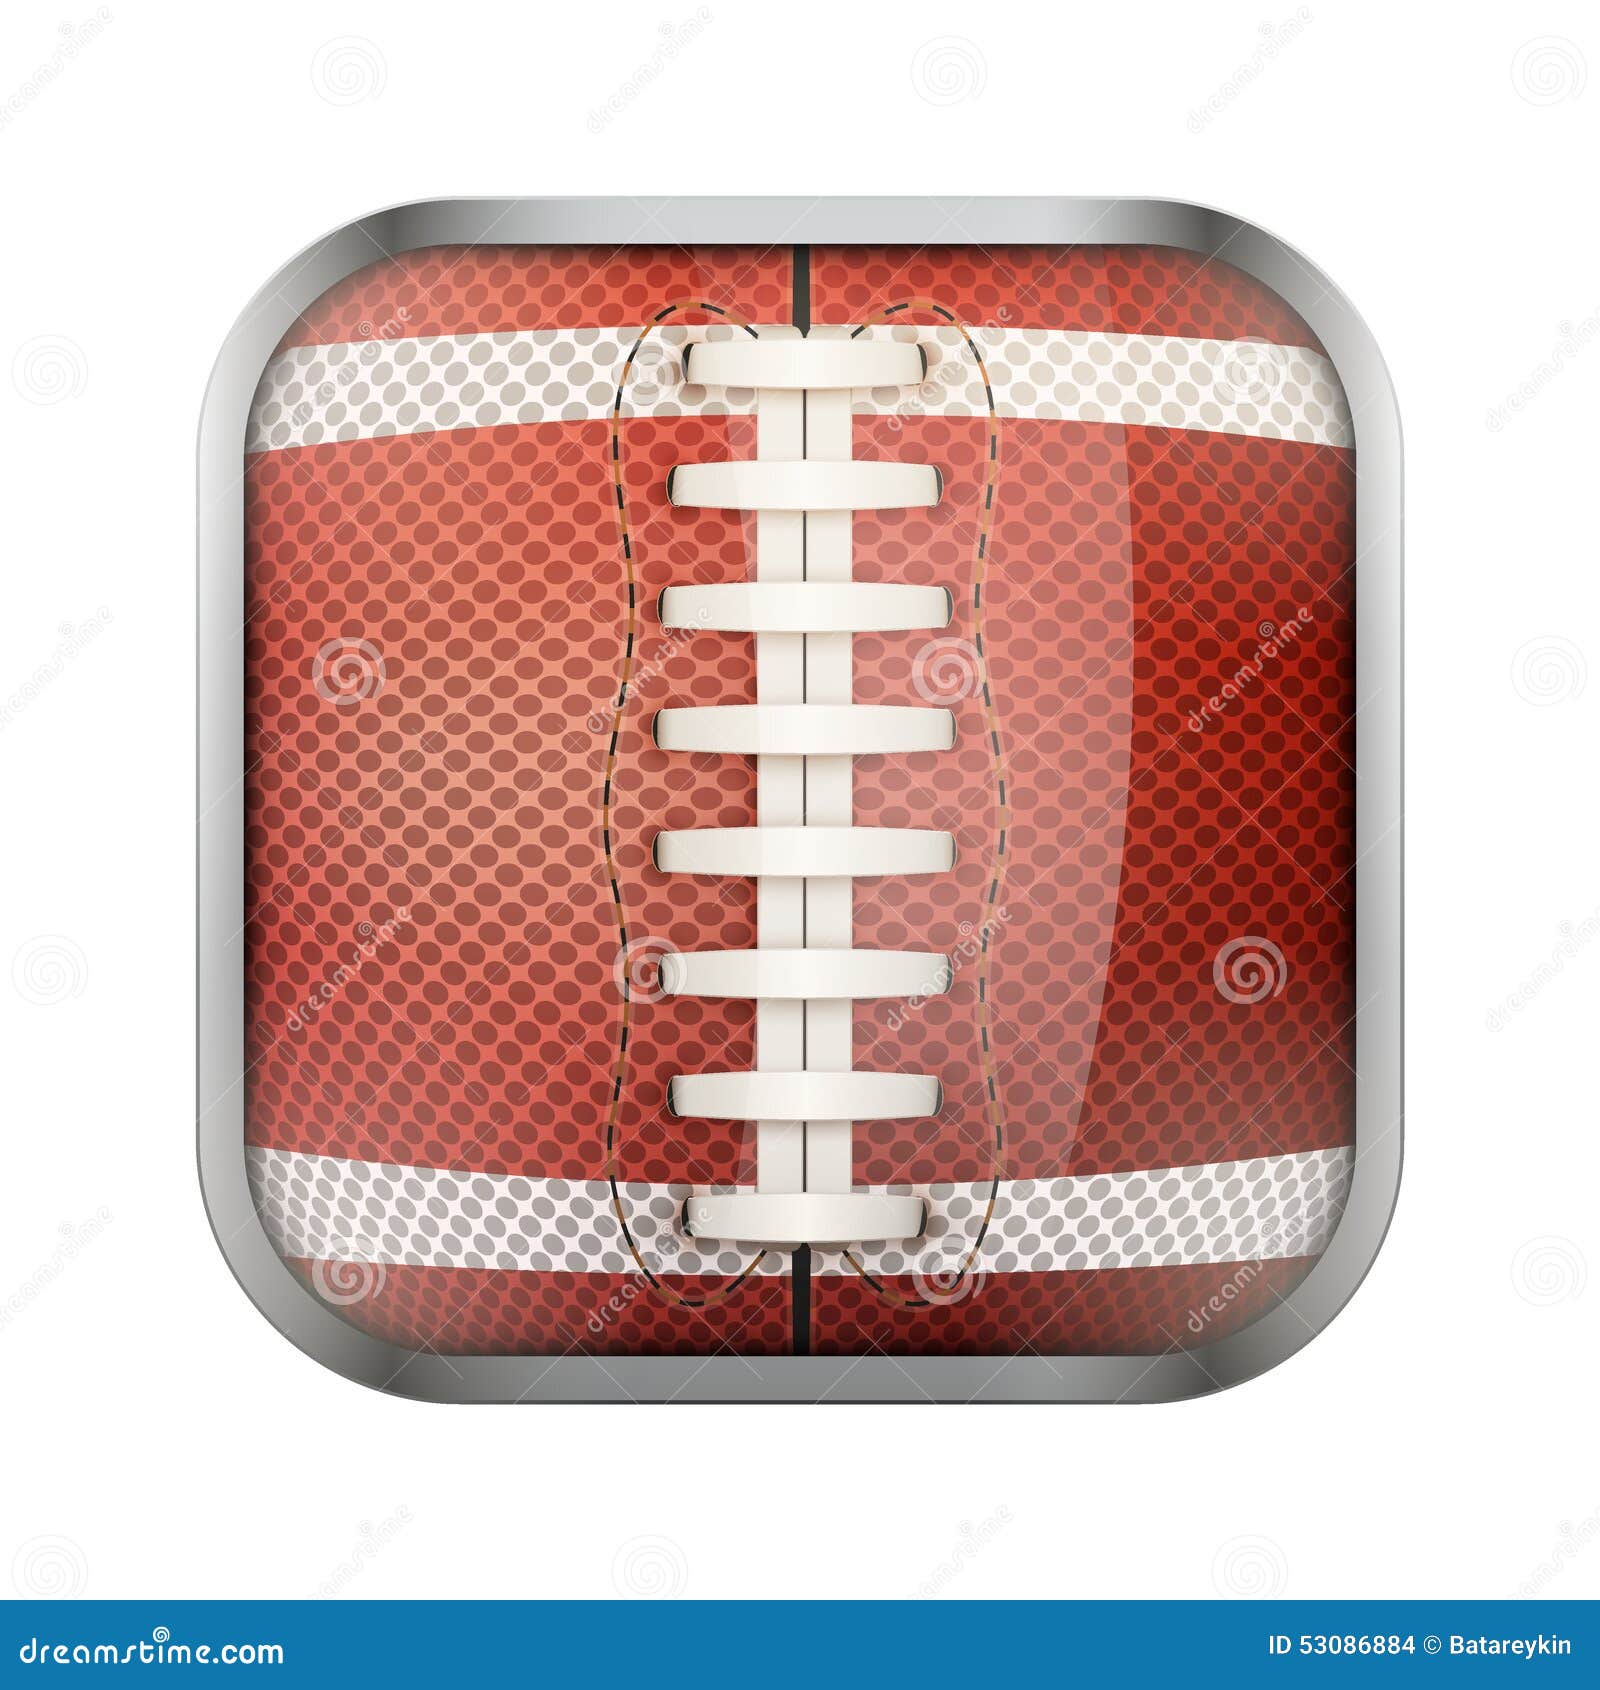 Poke Football Goal Foosball on the App Store